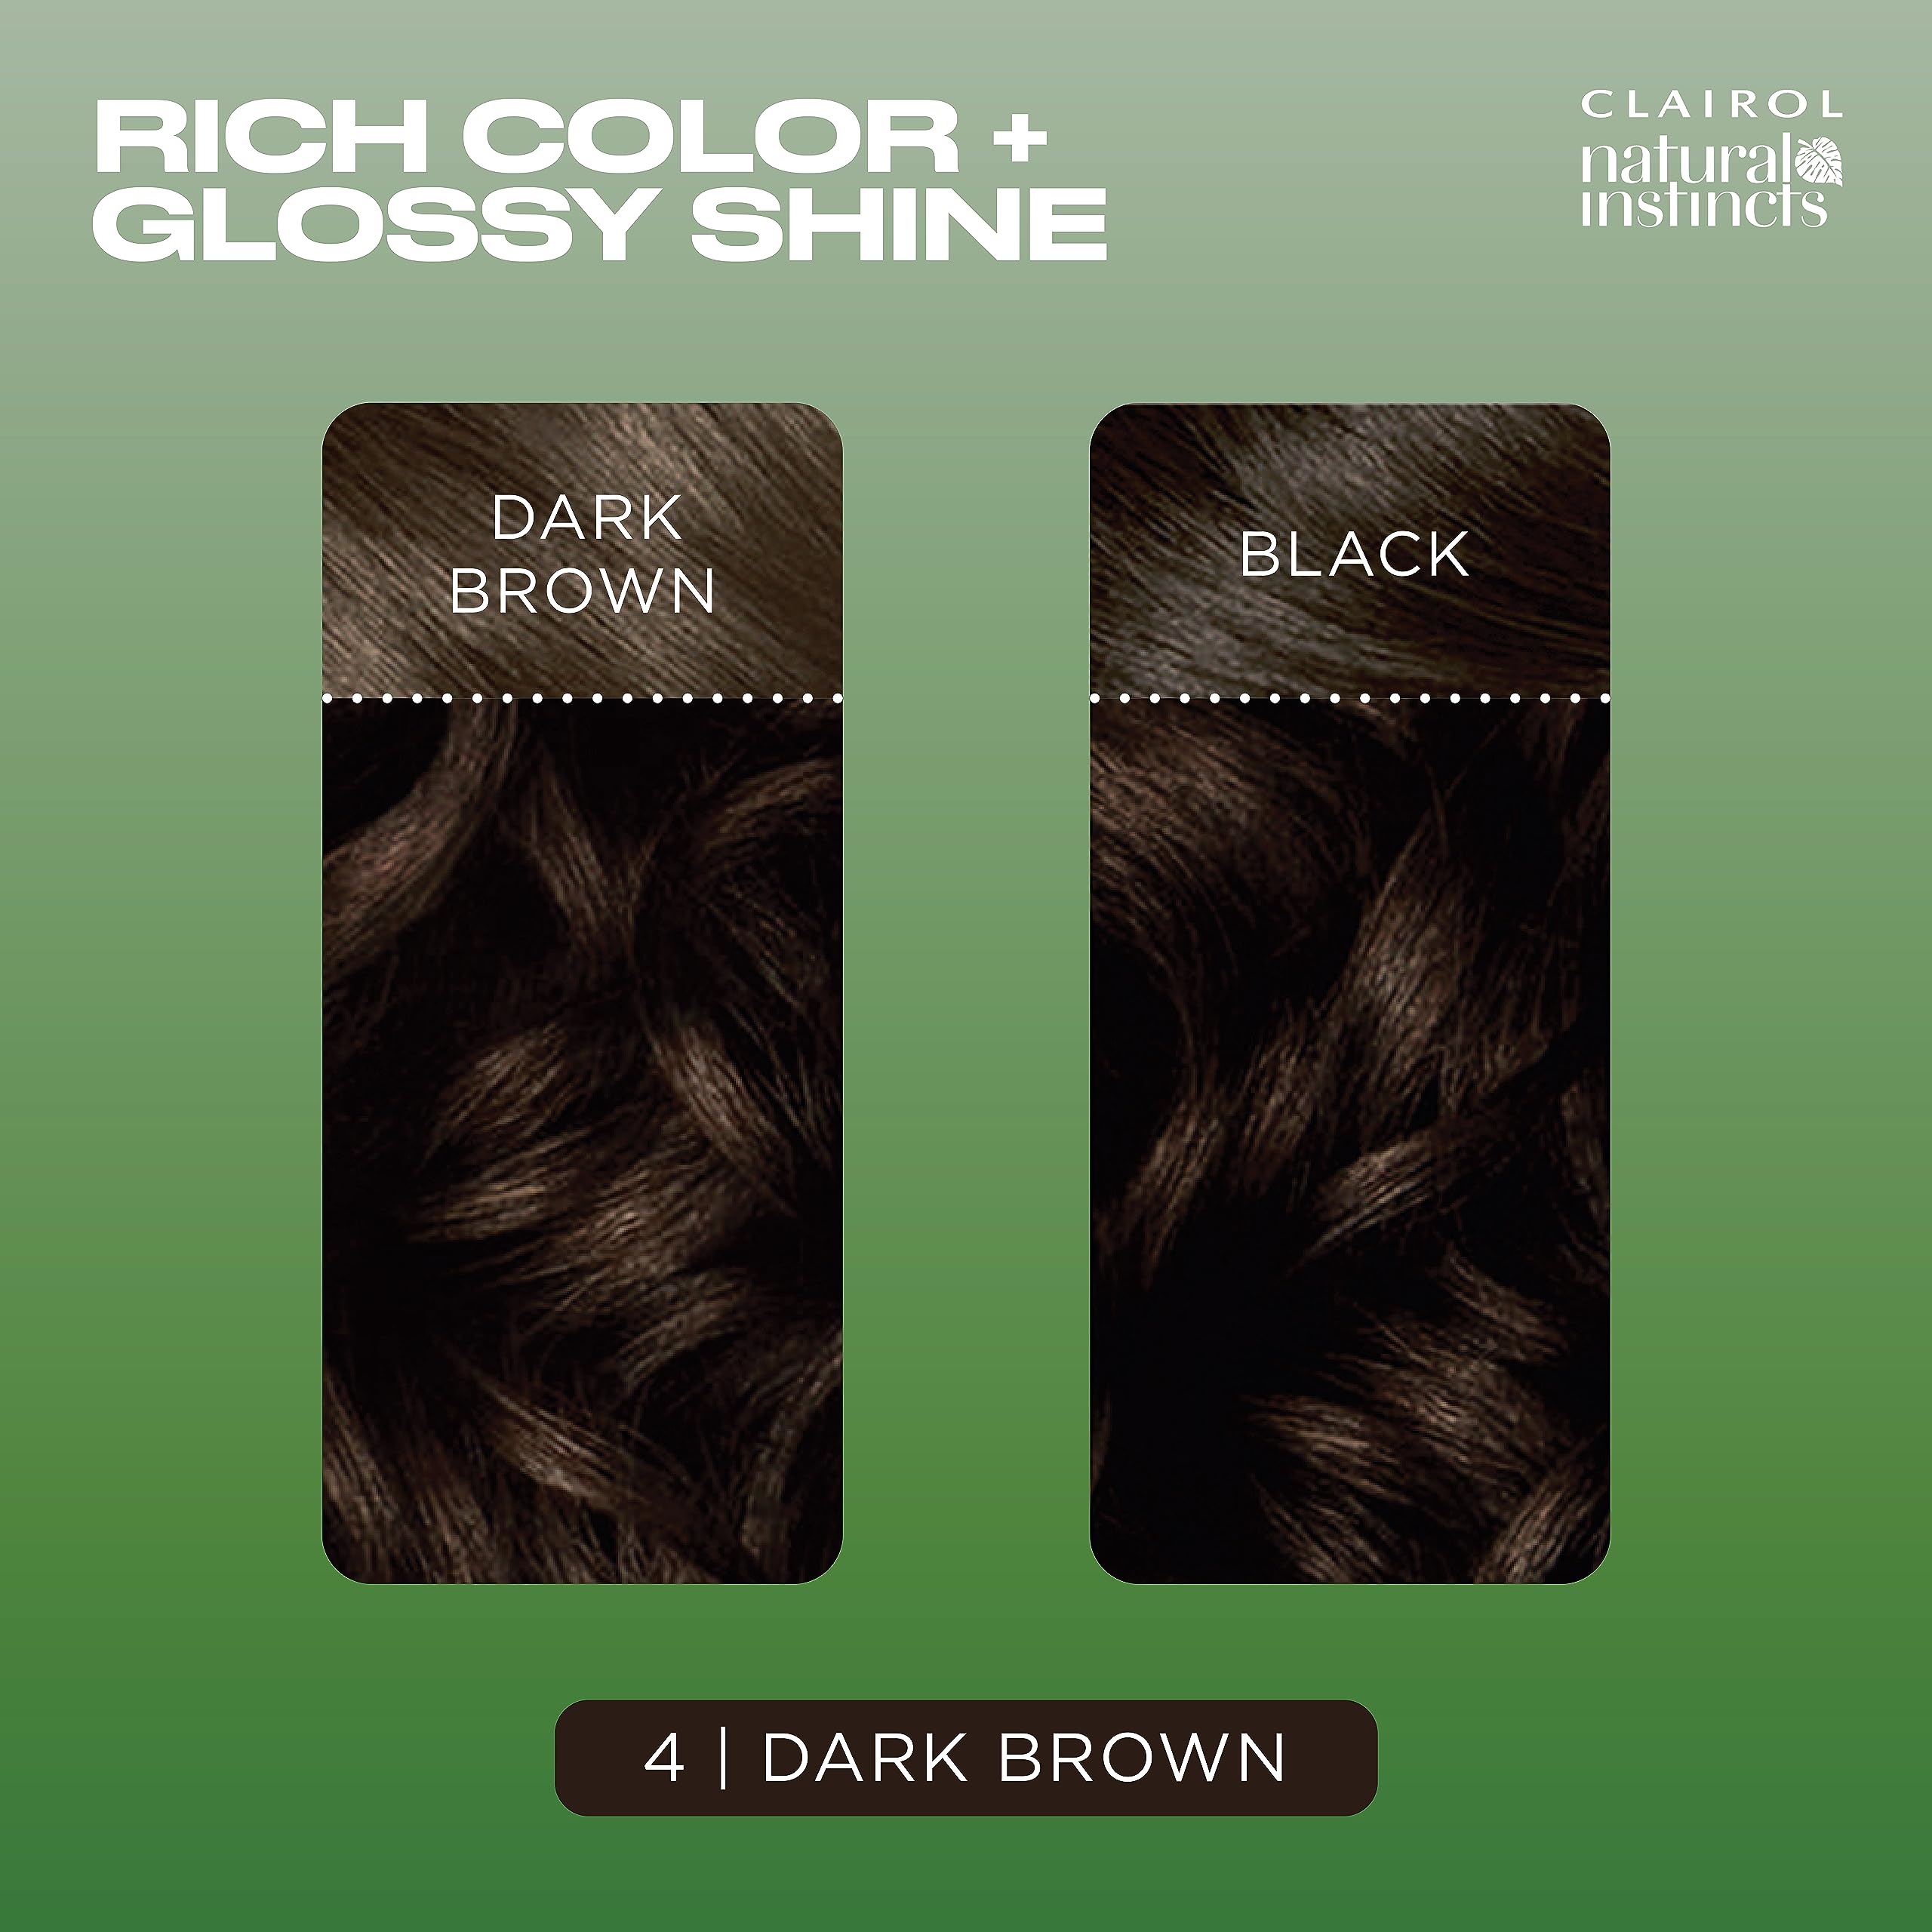 Clairol Natural Instincts Demi-Permanent Hair Dye, 4 Dark Brown Hair Color, Pack of 1